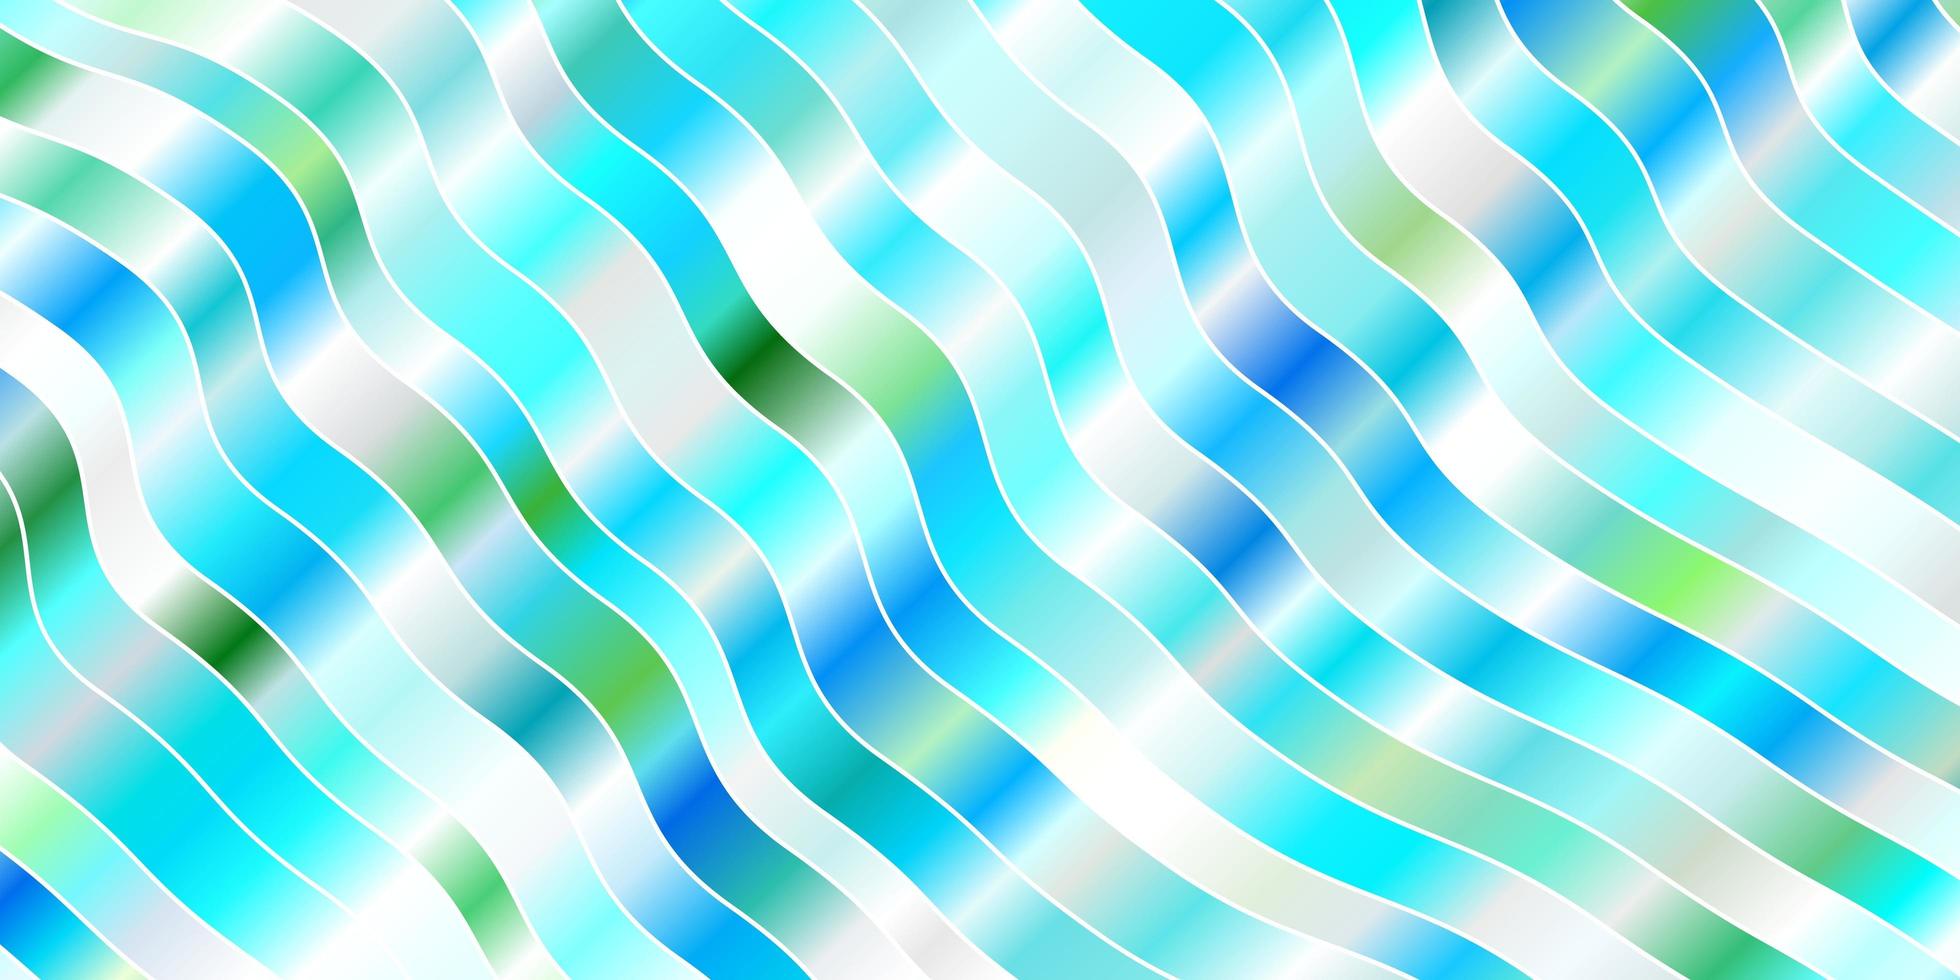 patrón de vector azul claro, verde con líneas torcidas.